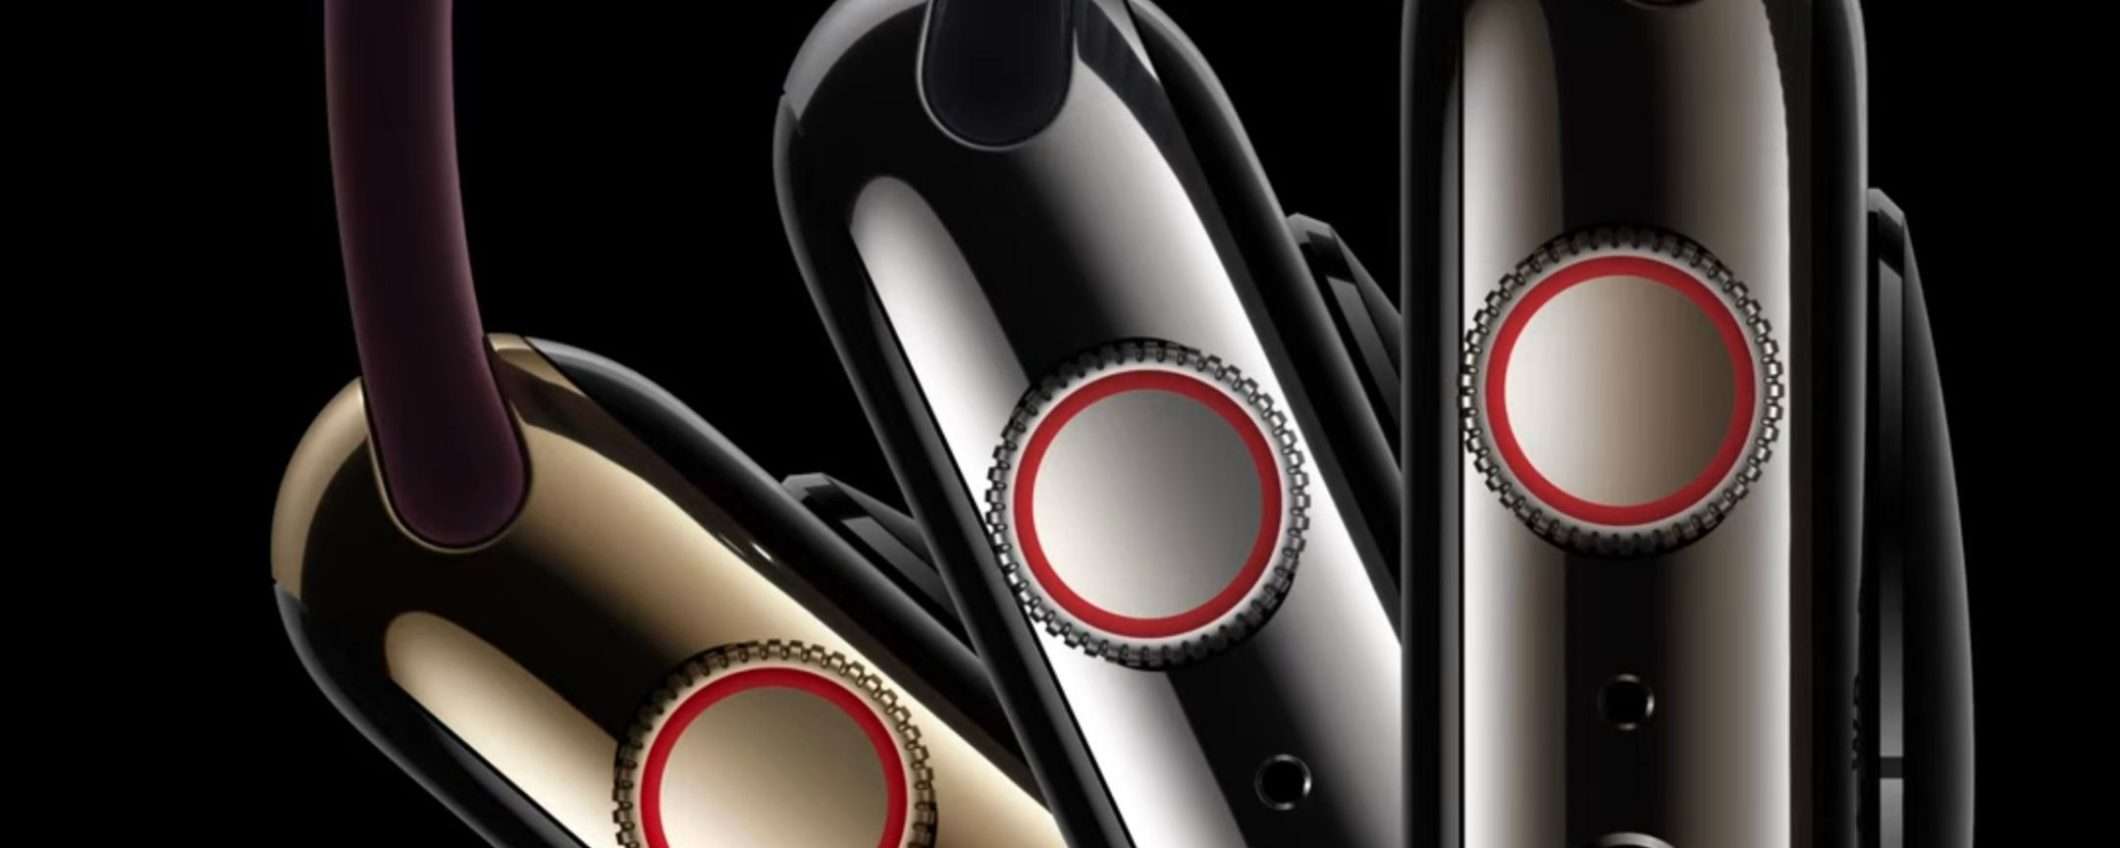 Apple Watch Series 9 si usa senza toccarlo: l'assurda funzione STUPISCE tutti